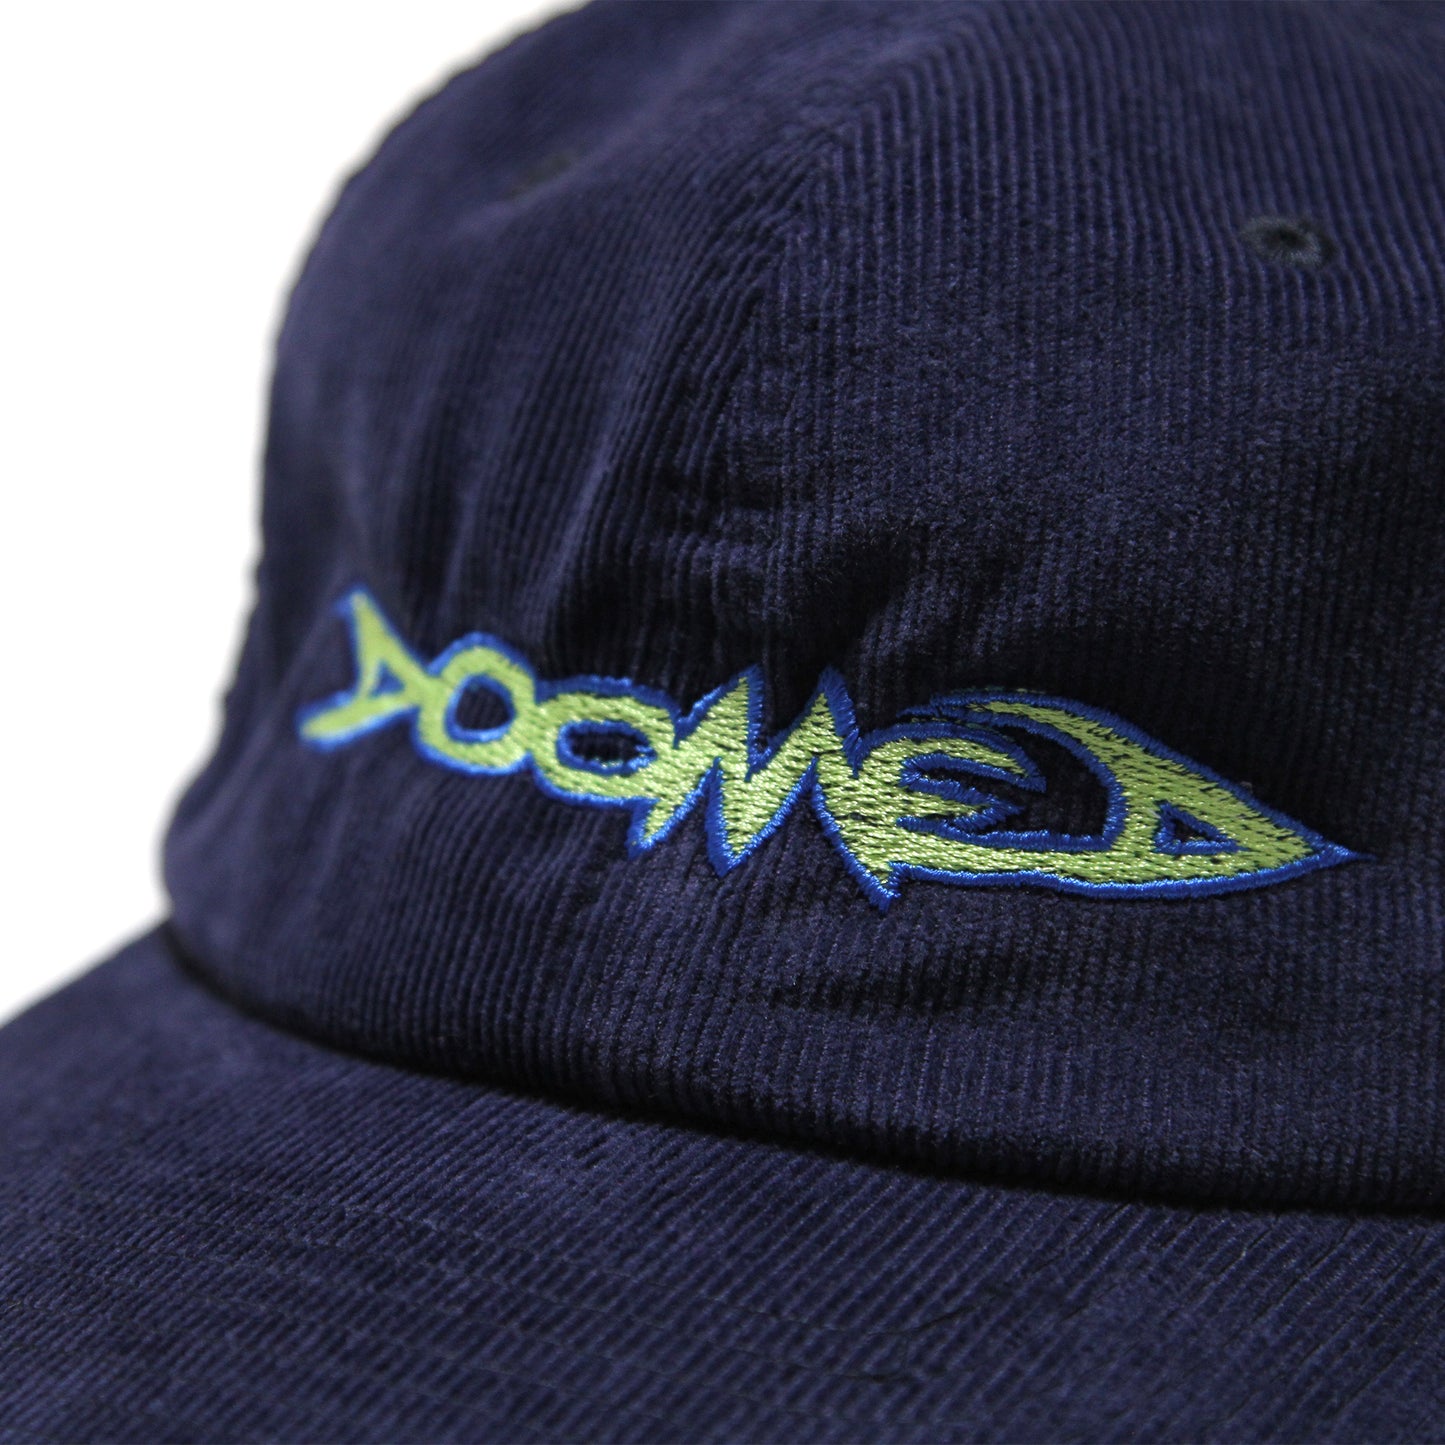 DOOMED - High Point Cord Cap/Navy